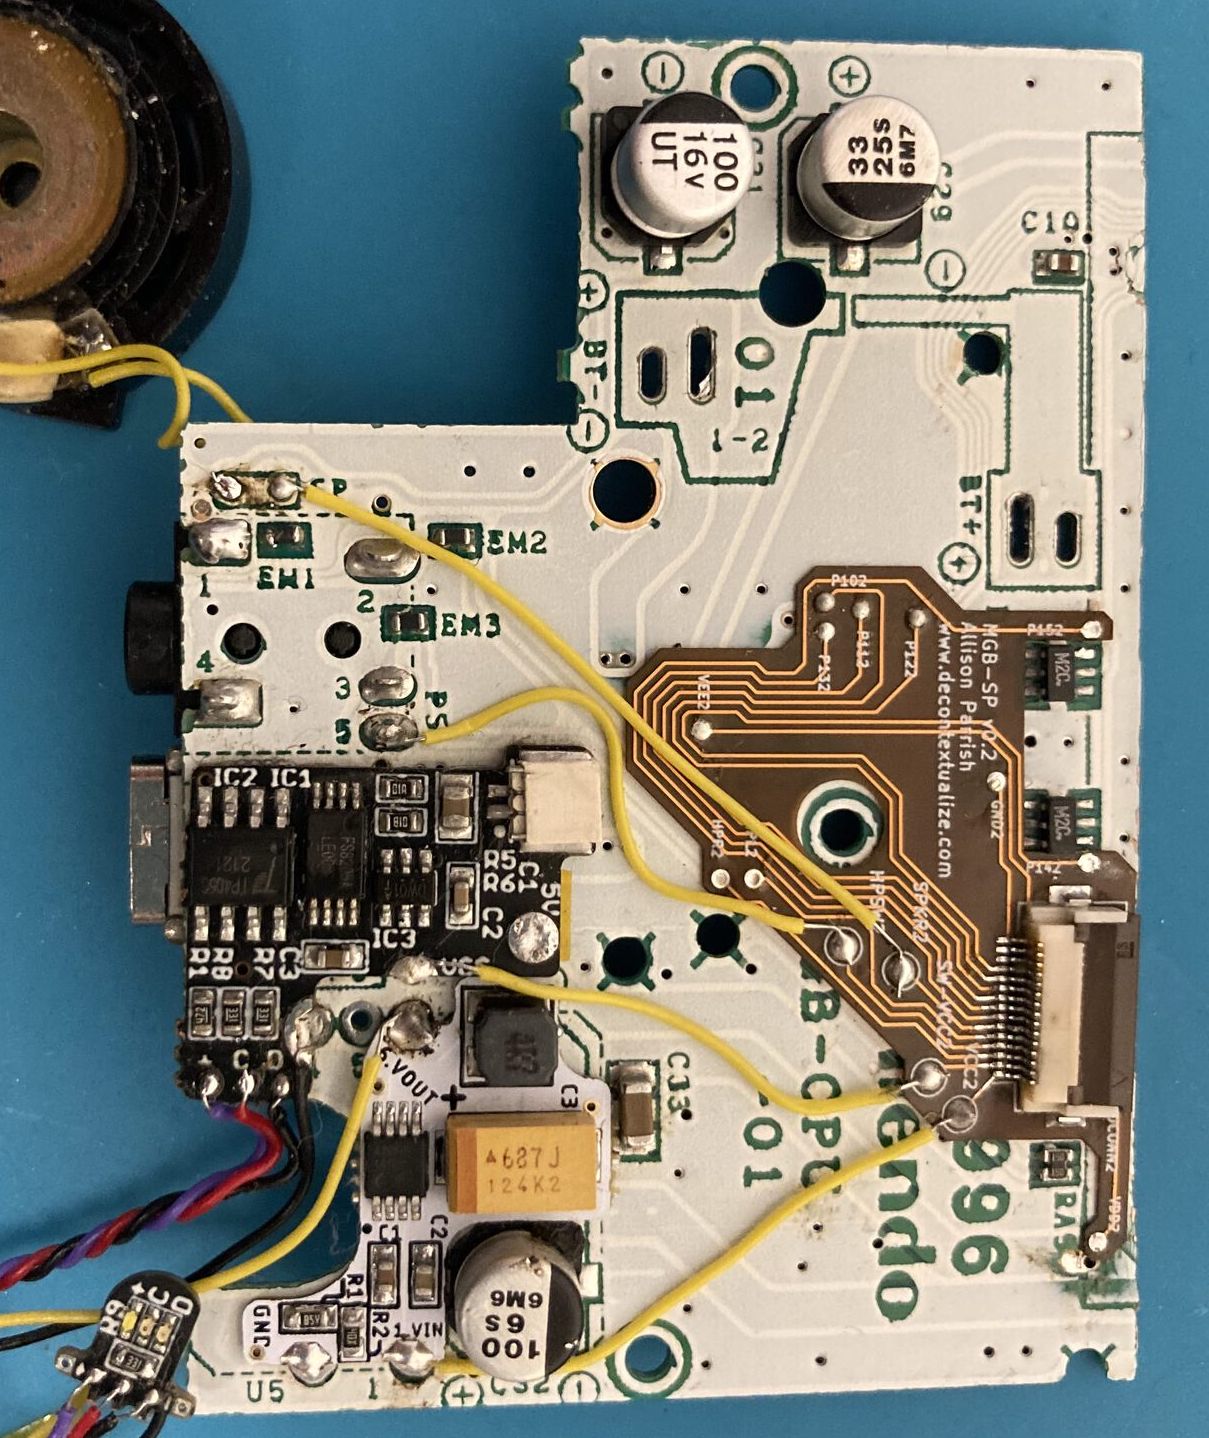 Lower half of flex PCB soldered to lower half of Pocket motherboard